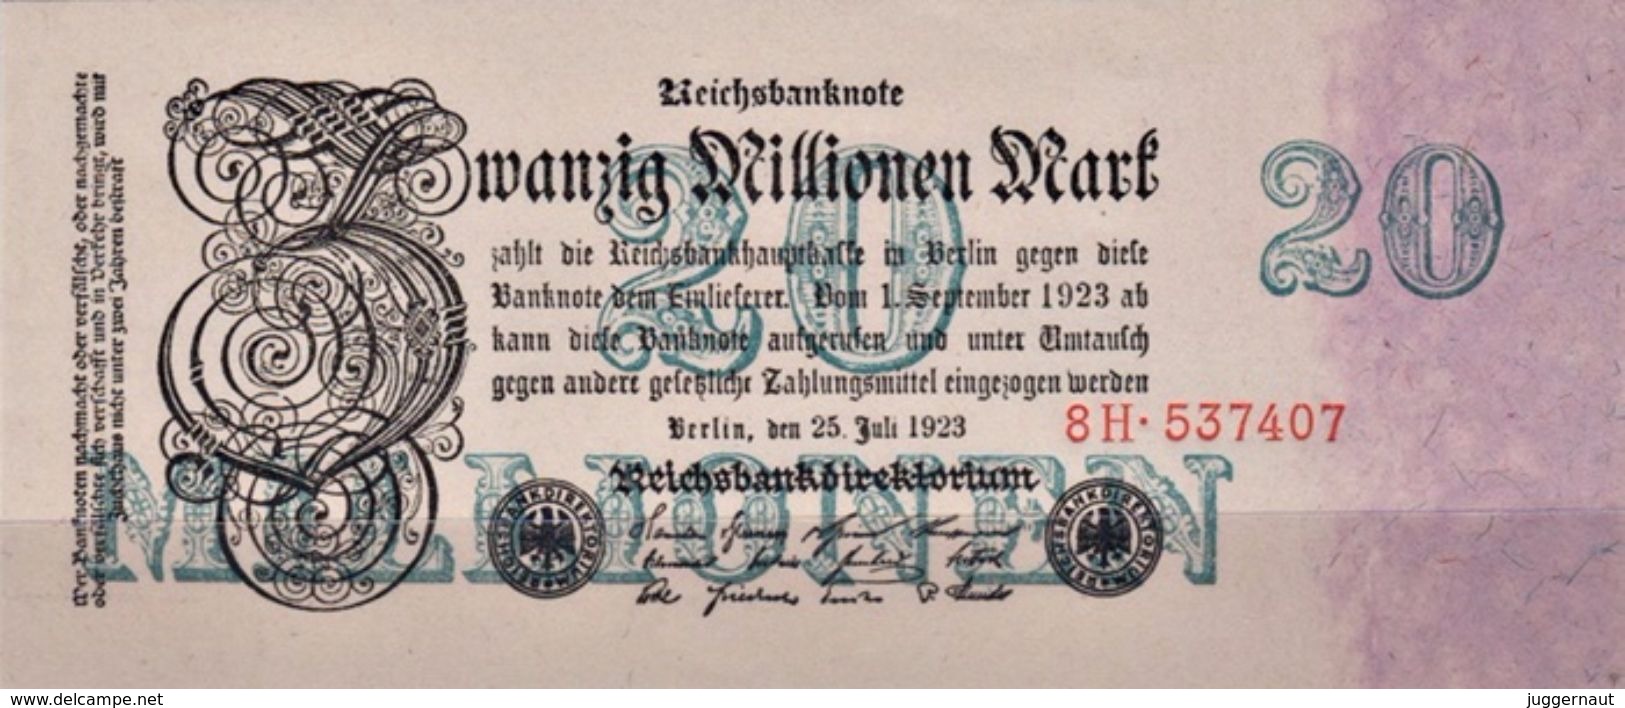 GERMANY 20 MILLIONEN MARK REICHSBANKNOTE 1923 AD PICK NO.97 UNCIRCULATED UNC - 20 Miljoen Mark